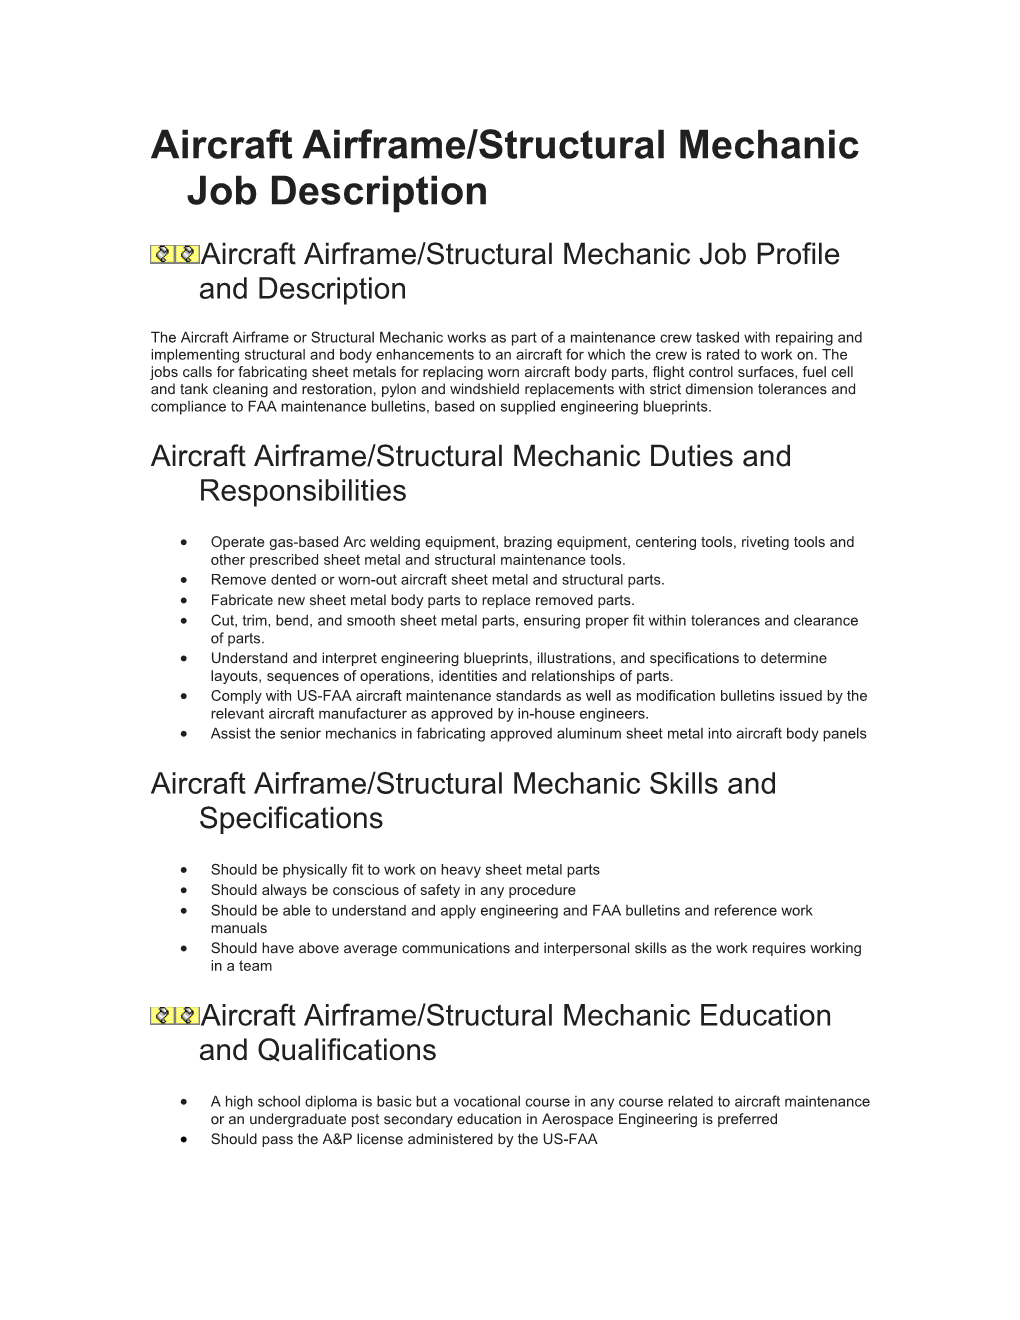 Aircraft Airframe/Structural Mechanic Job Description